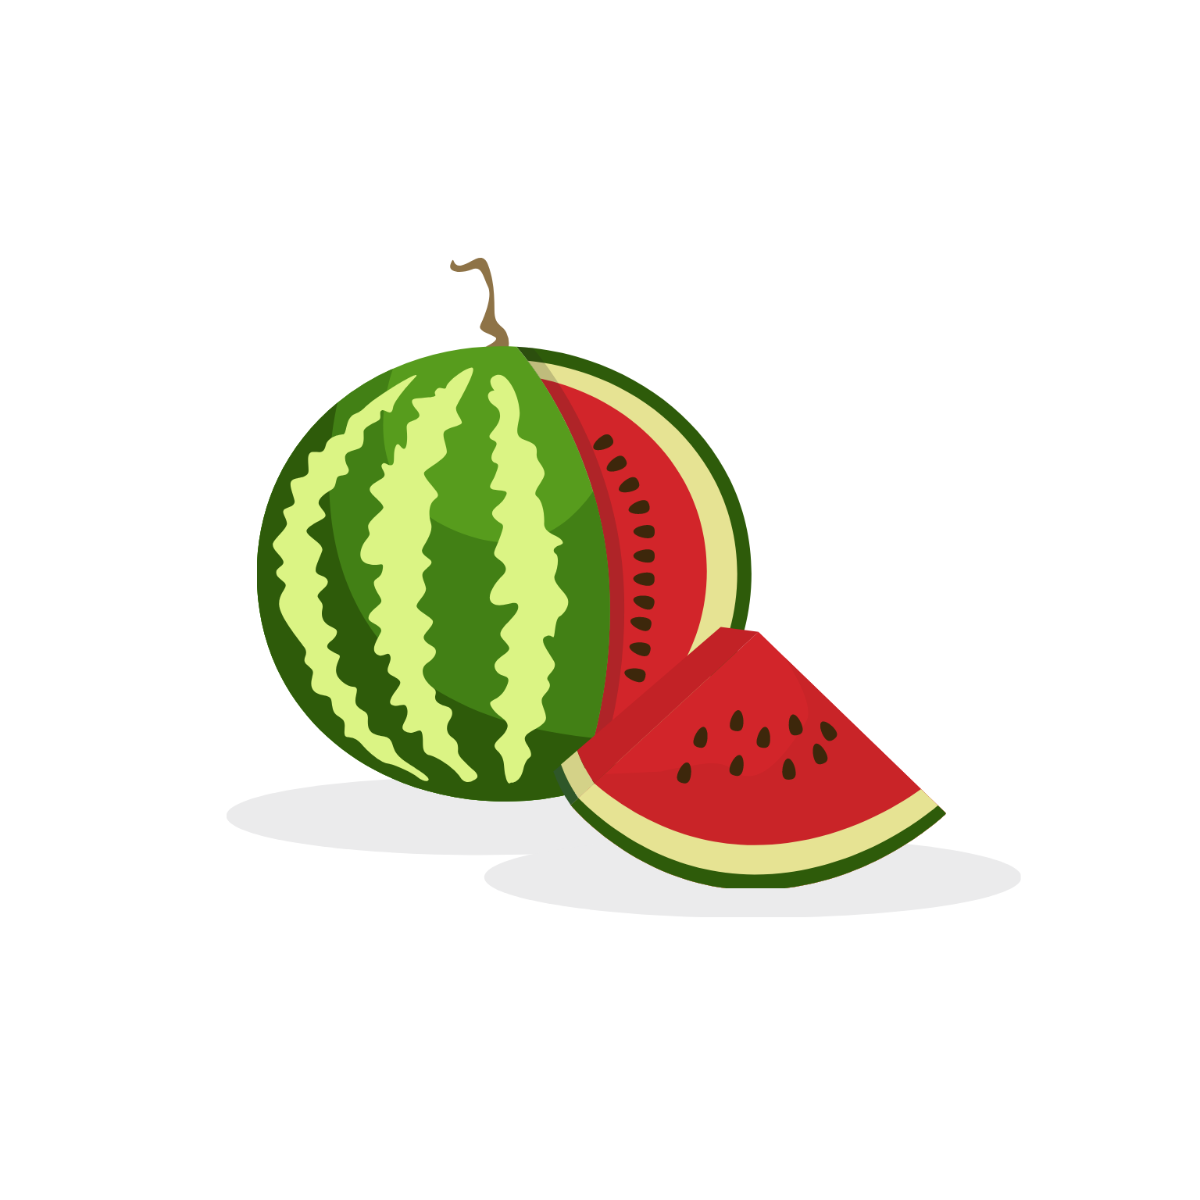 Watermelon Vector Template